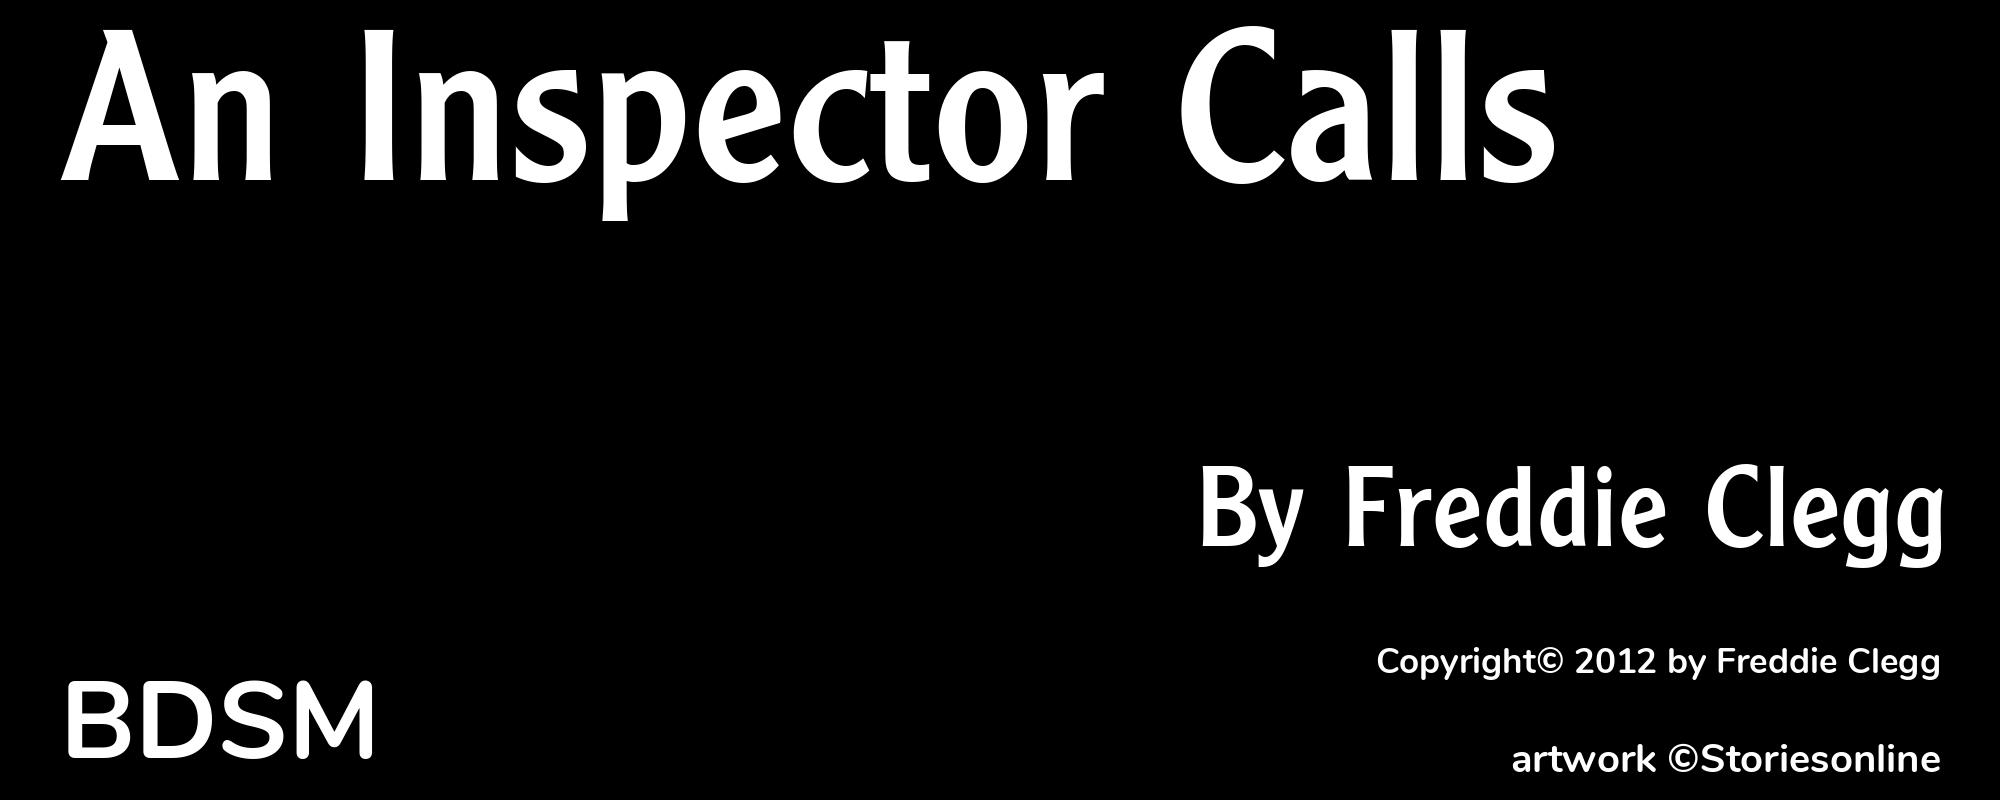 An Inspector Calls - Cover